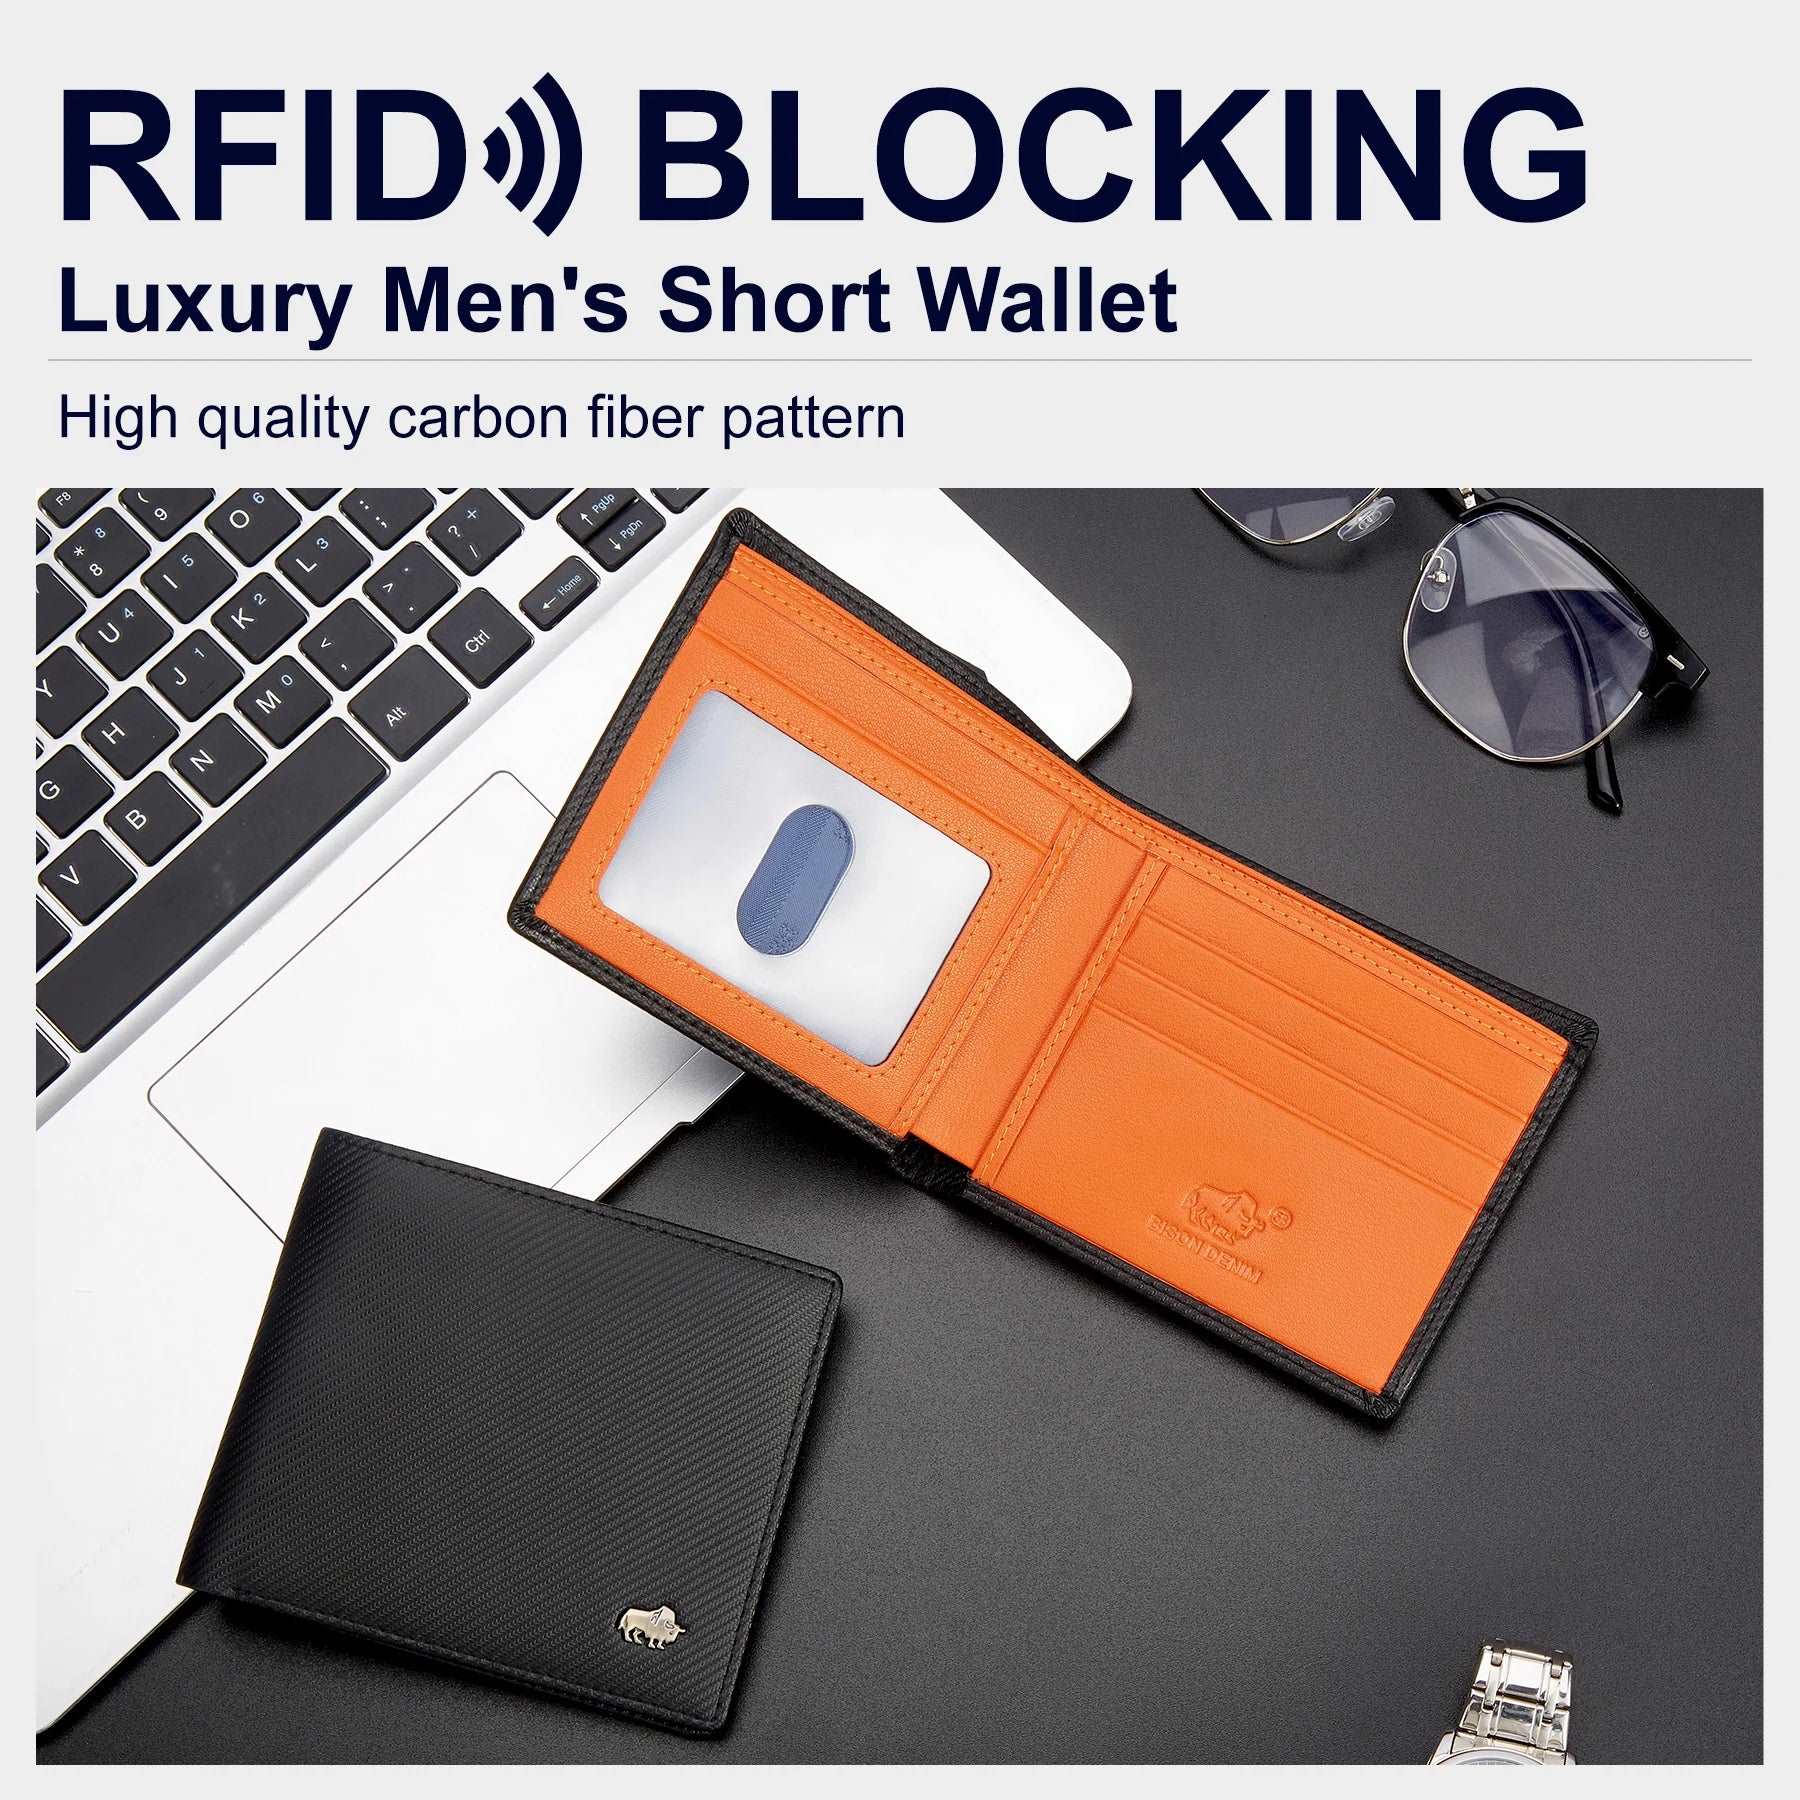 BISON DENIM Long Wallet Carbon Fiber Men's Purse RFID Blocking